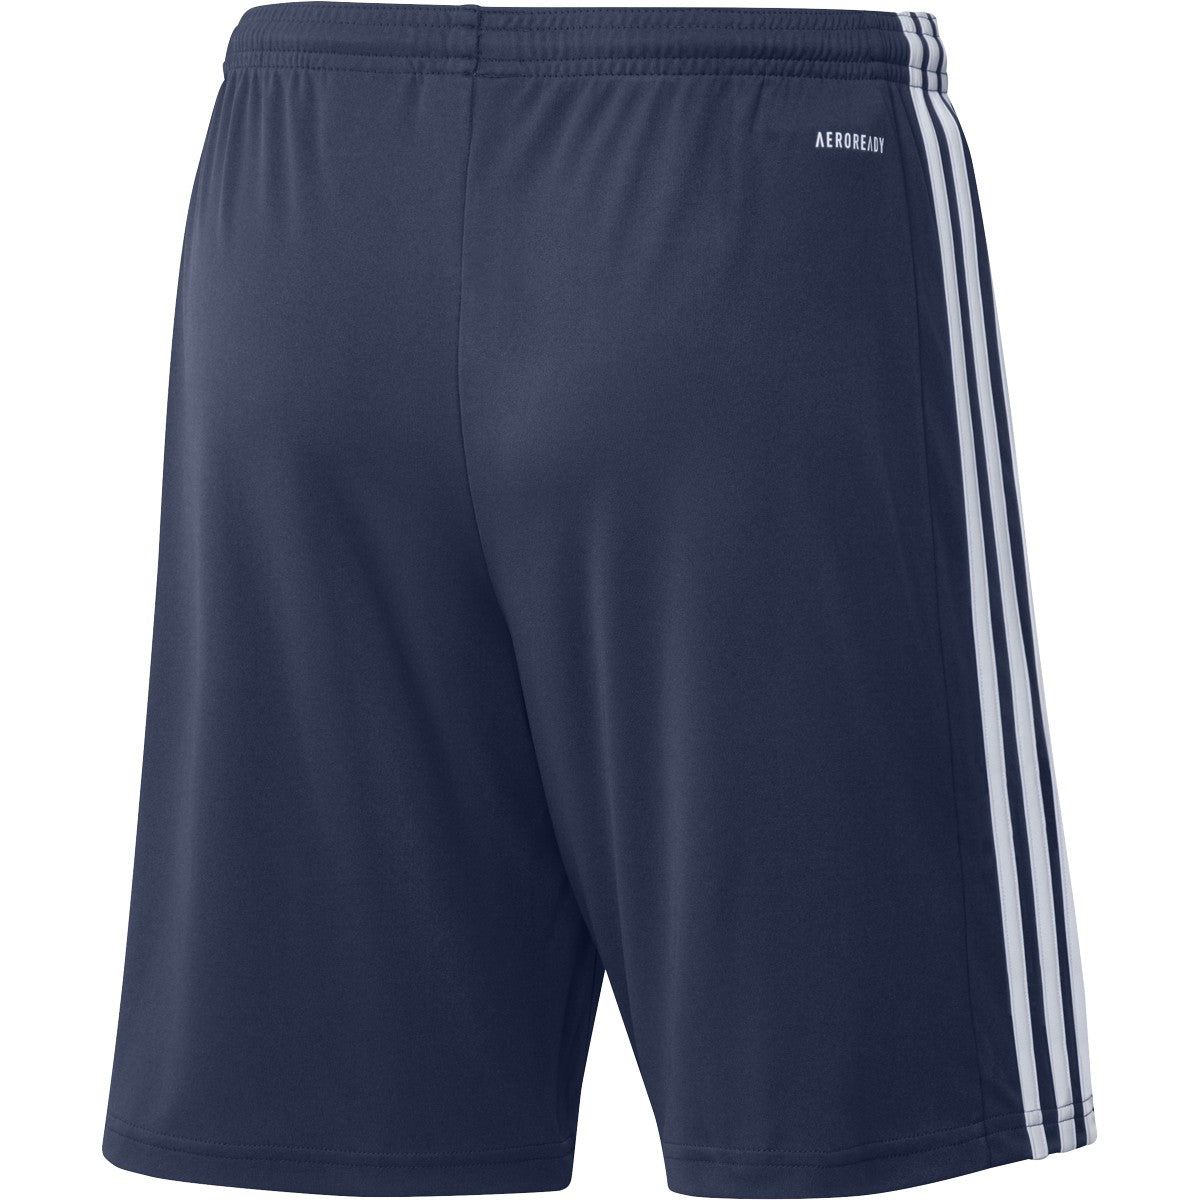 Adidas Squadra 21 Shorts- Navy/White